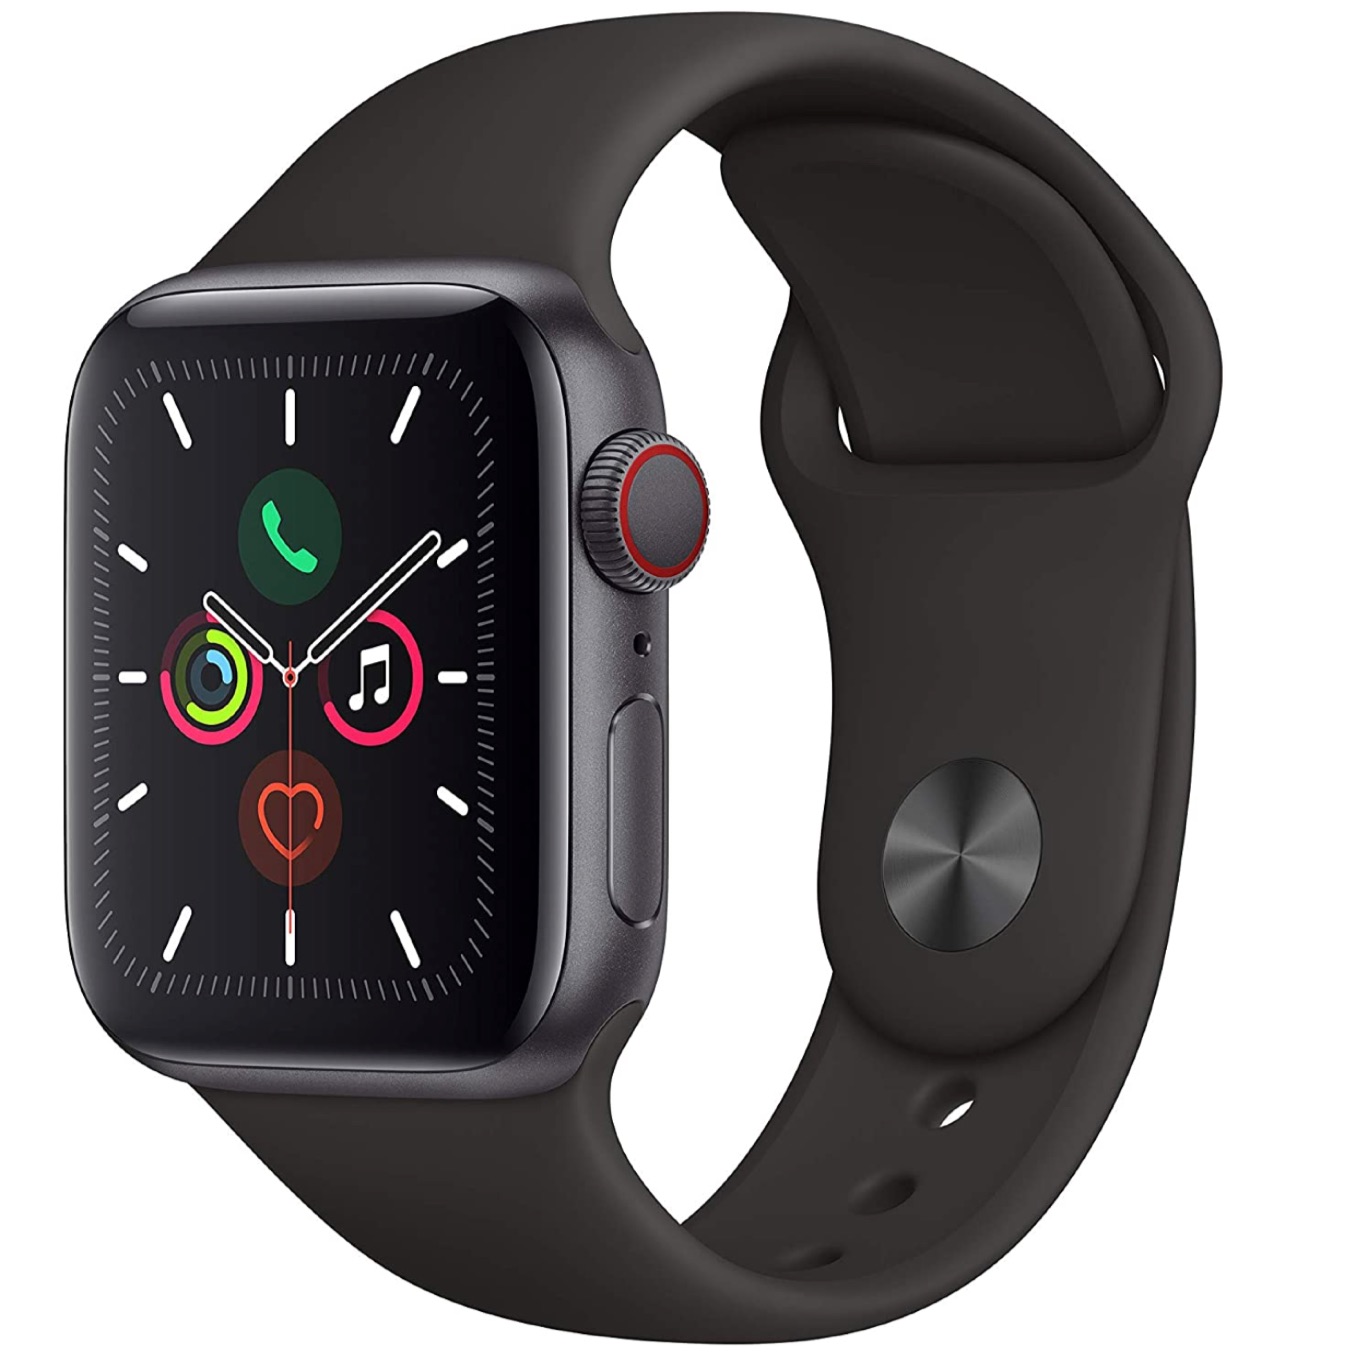 「Apple Watch」の心電図機能